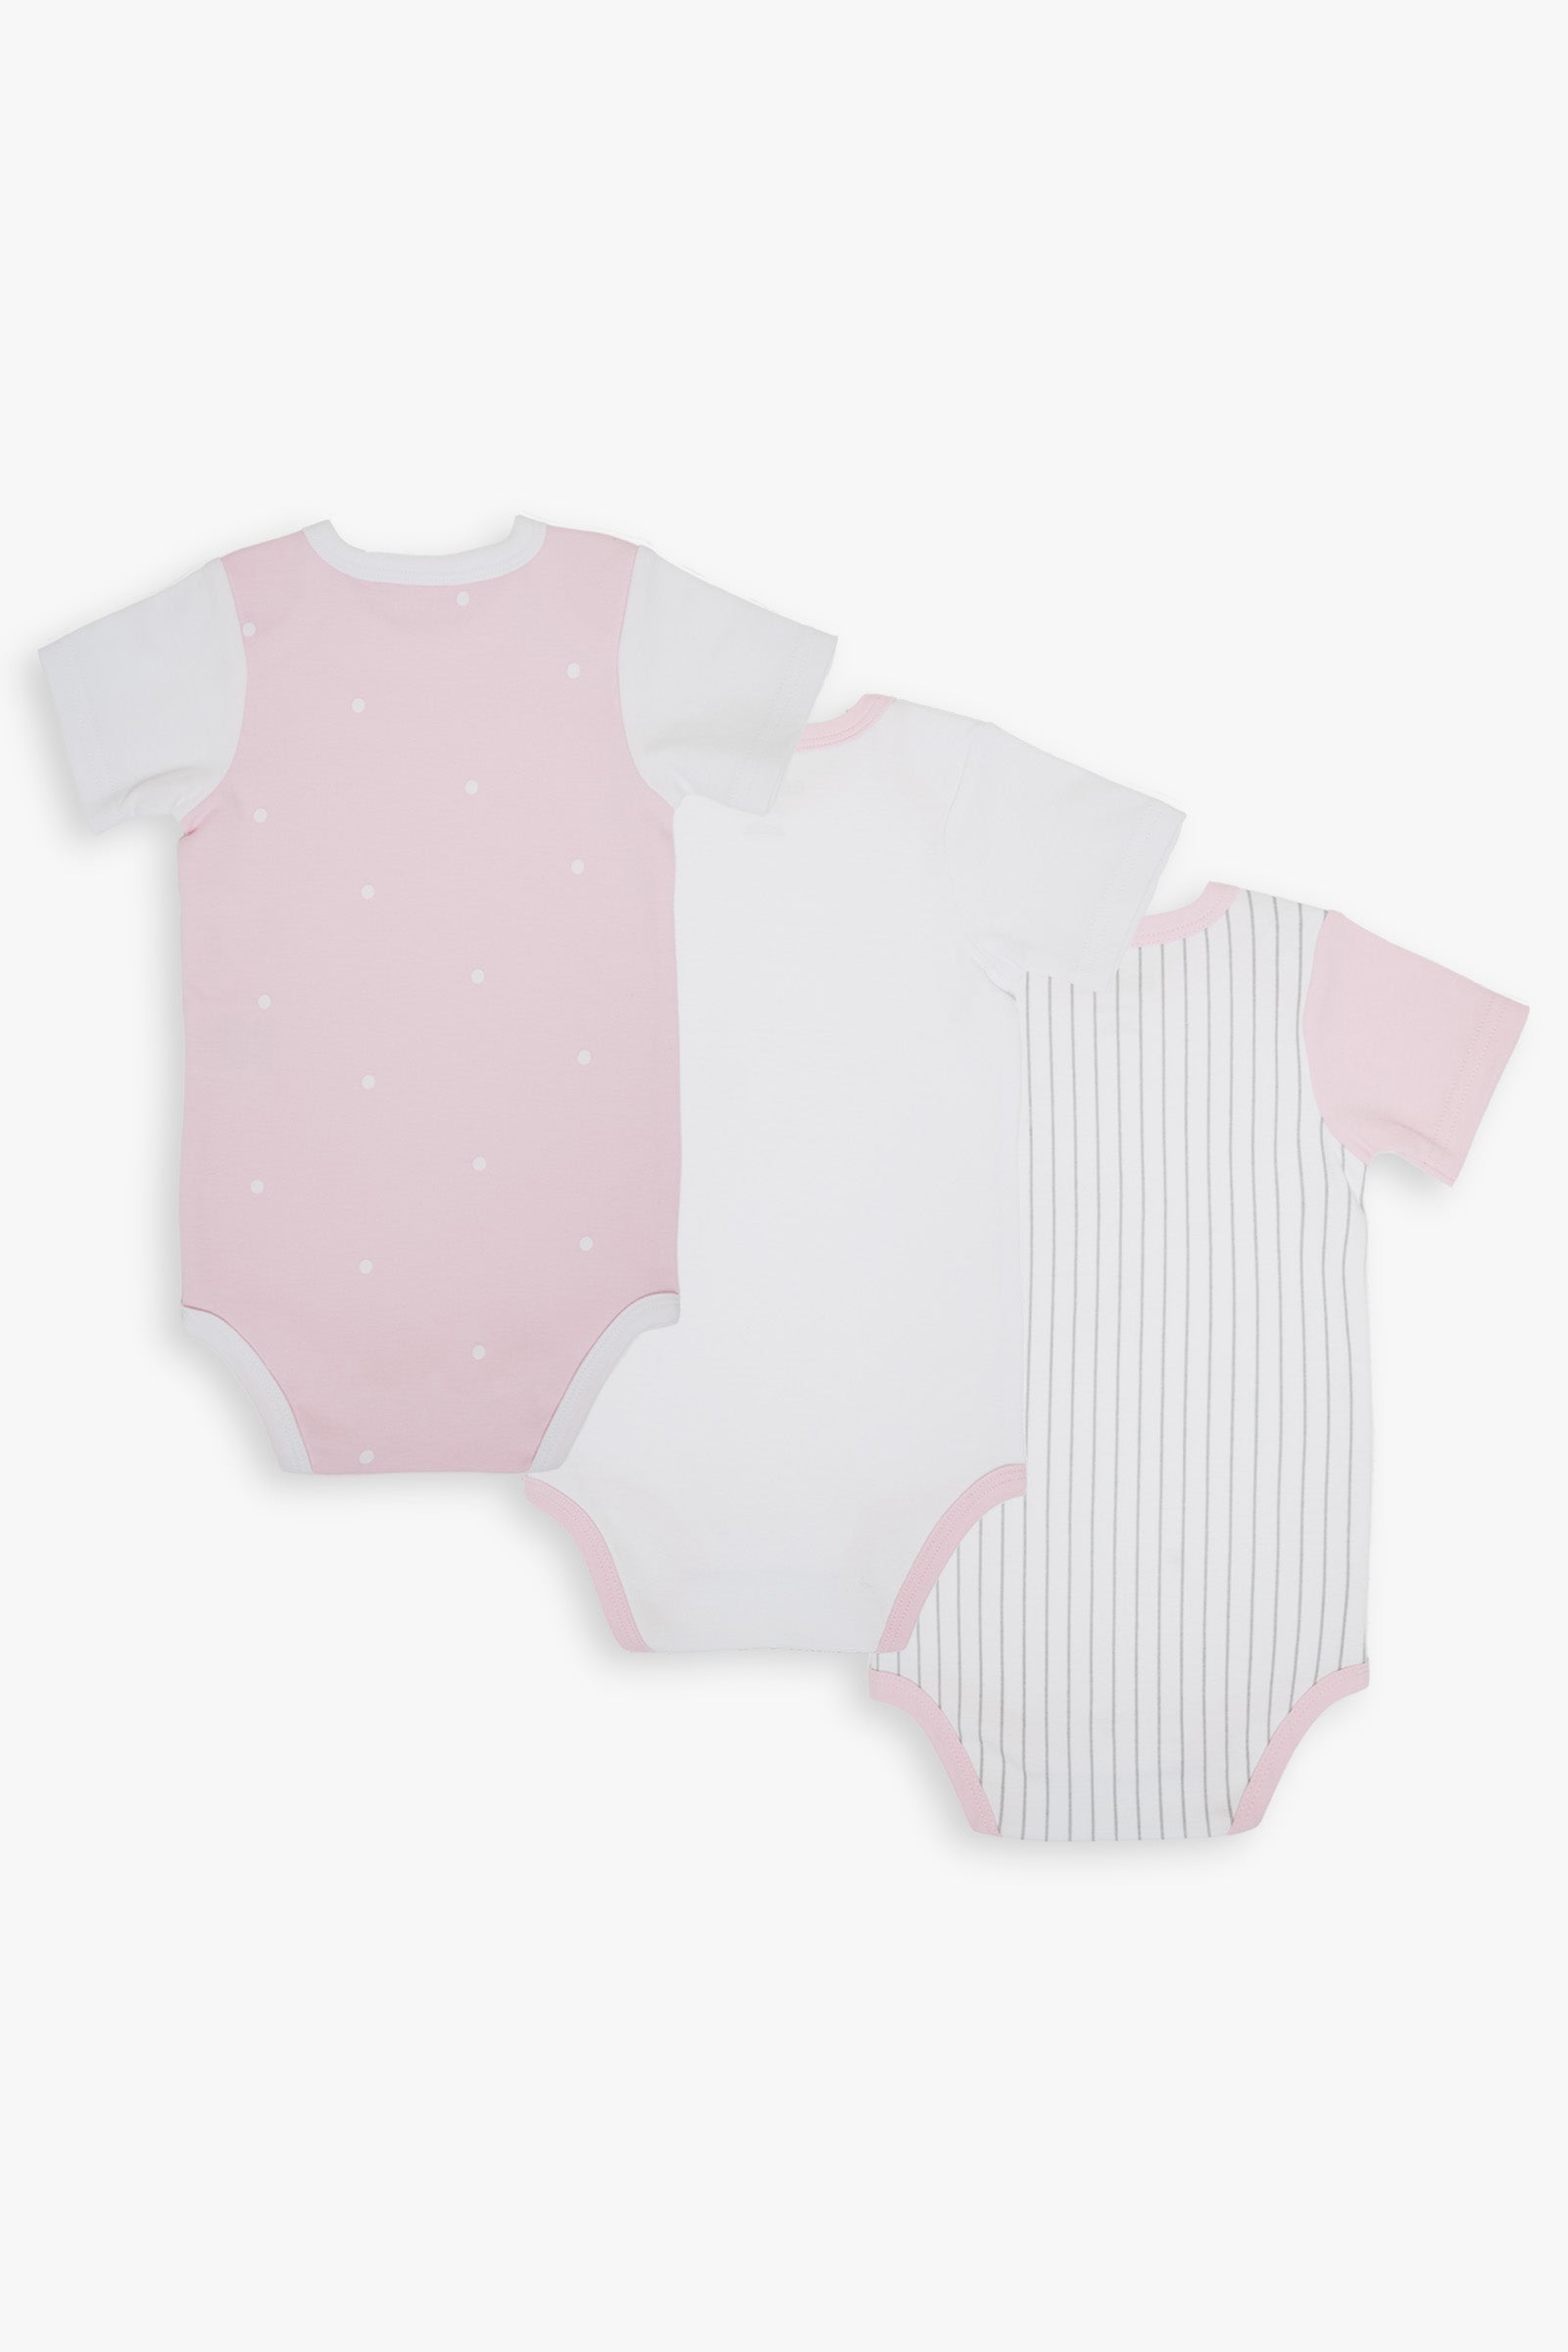 Girls Infant Soft As A Grape Pink/Purple Toronto Blue Jays 3-Pack Rookie Bodysuit Set